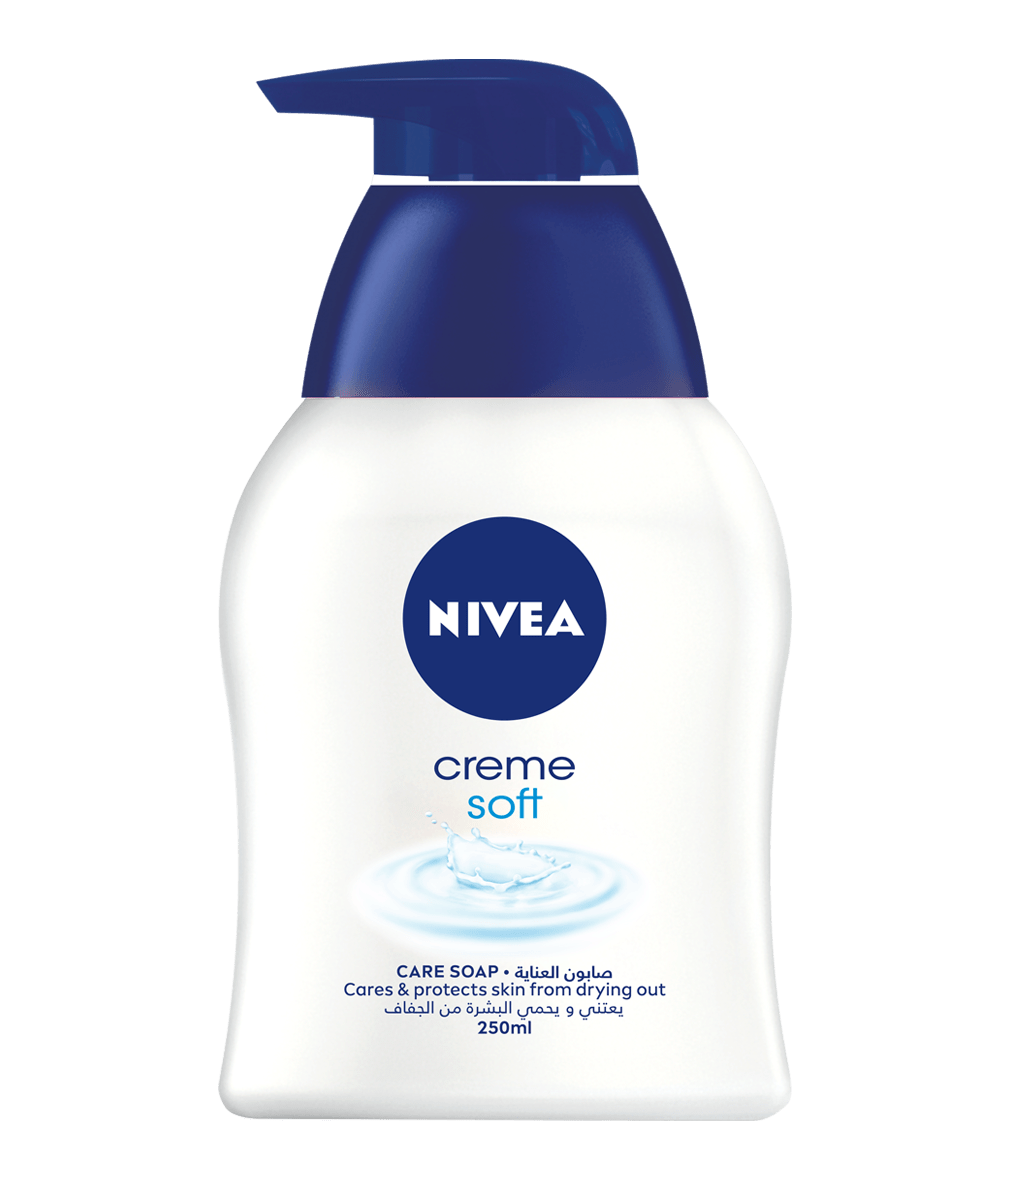 80700 NIVEA Creme Soft Liquid Handwash 250ml clean packshot bi-lingual